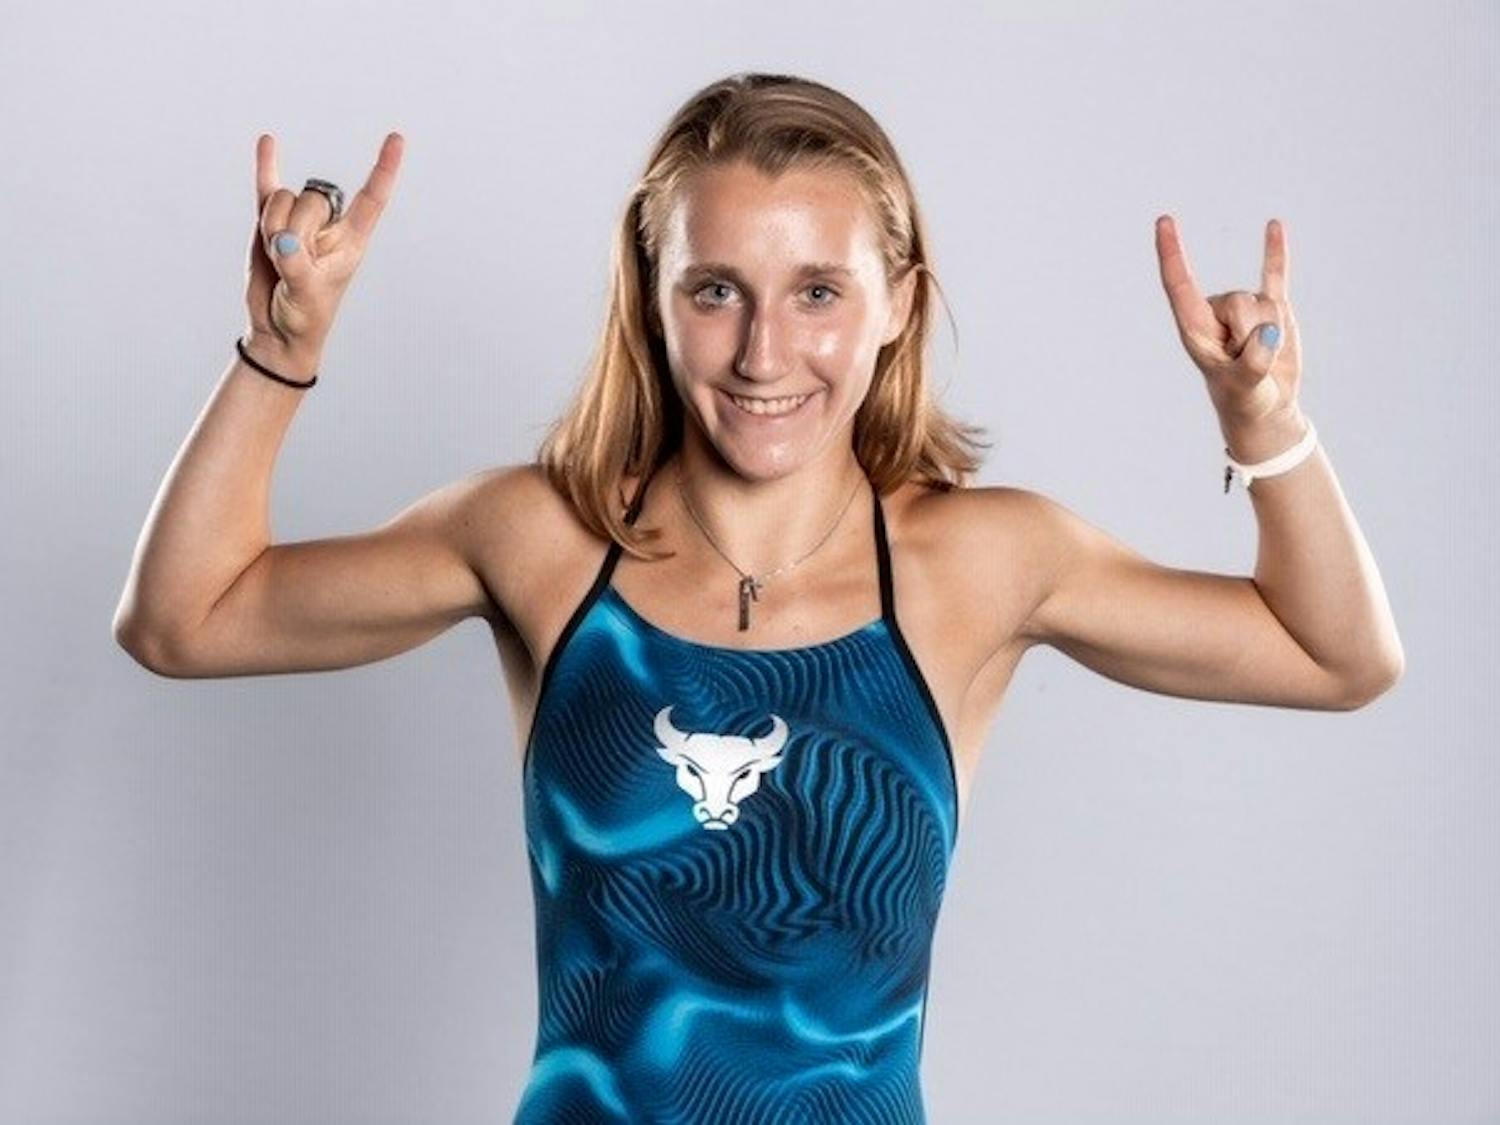 Junior diver Tori Franz strikes a “horns up” pose in a preseason photoshoot.